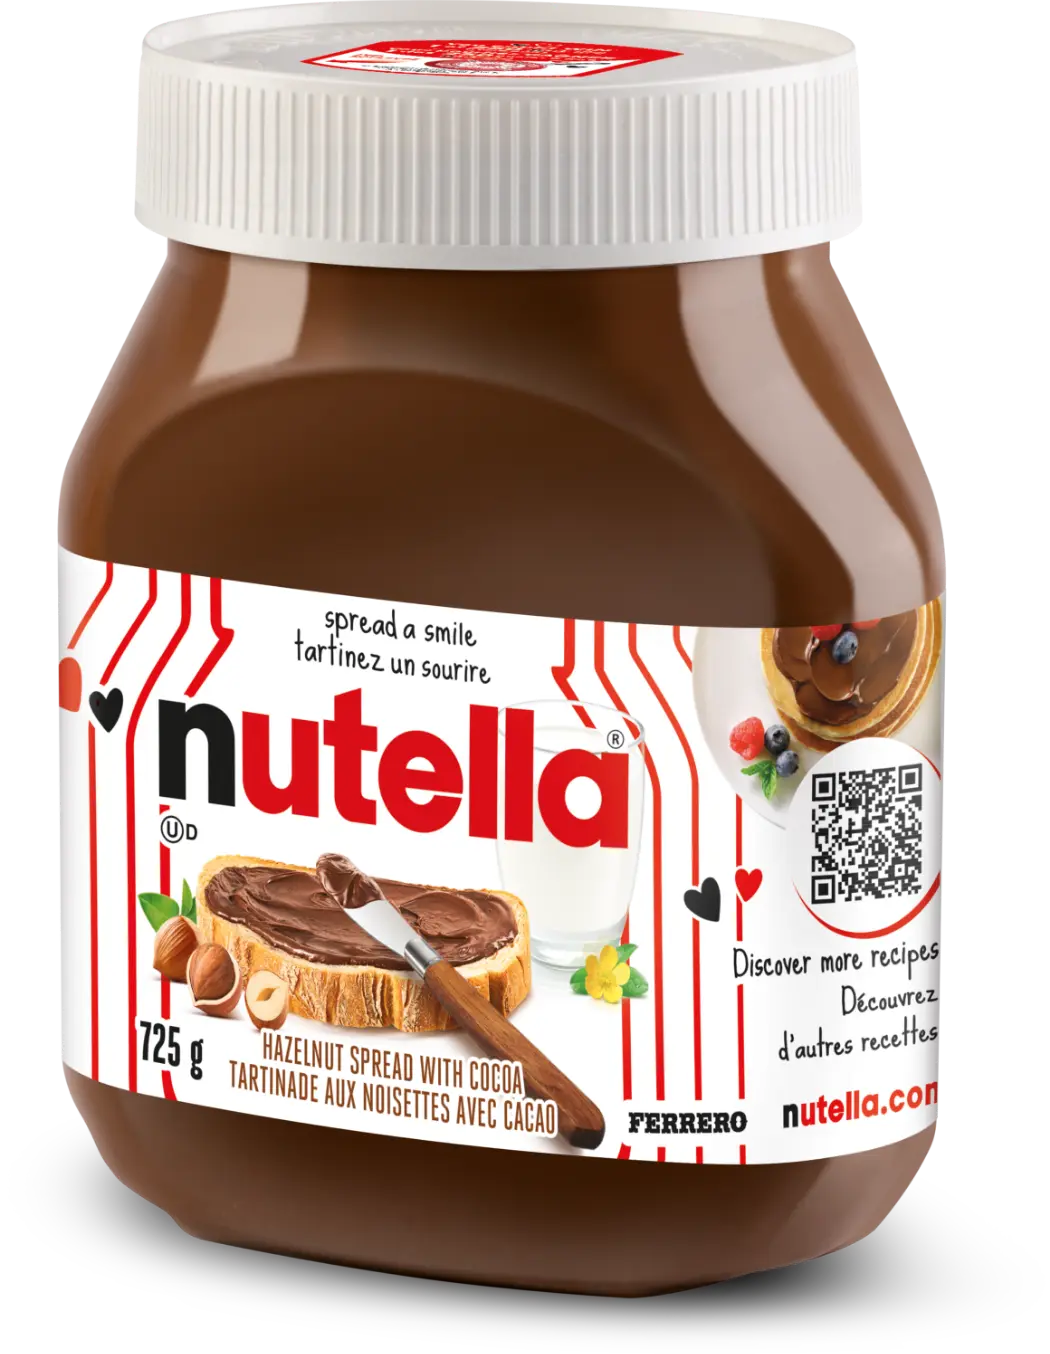 nutella product image